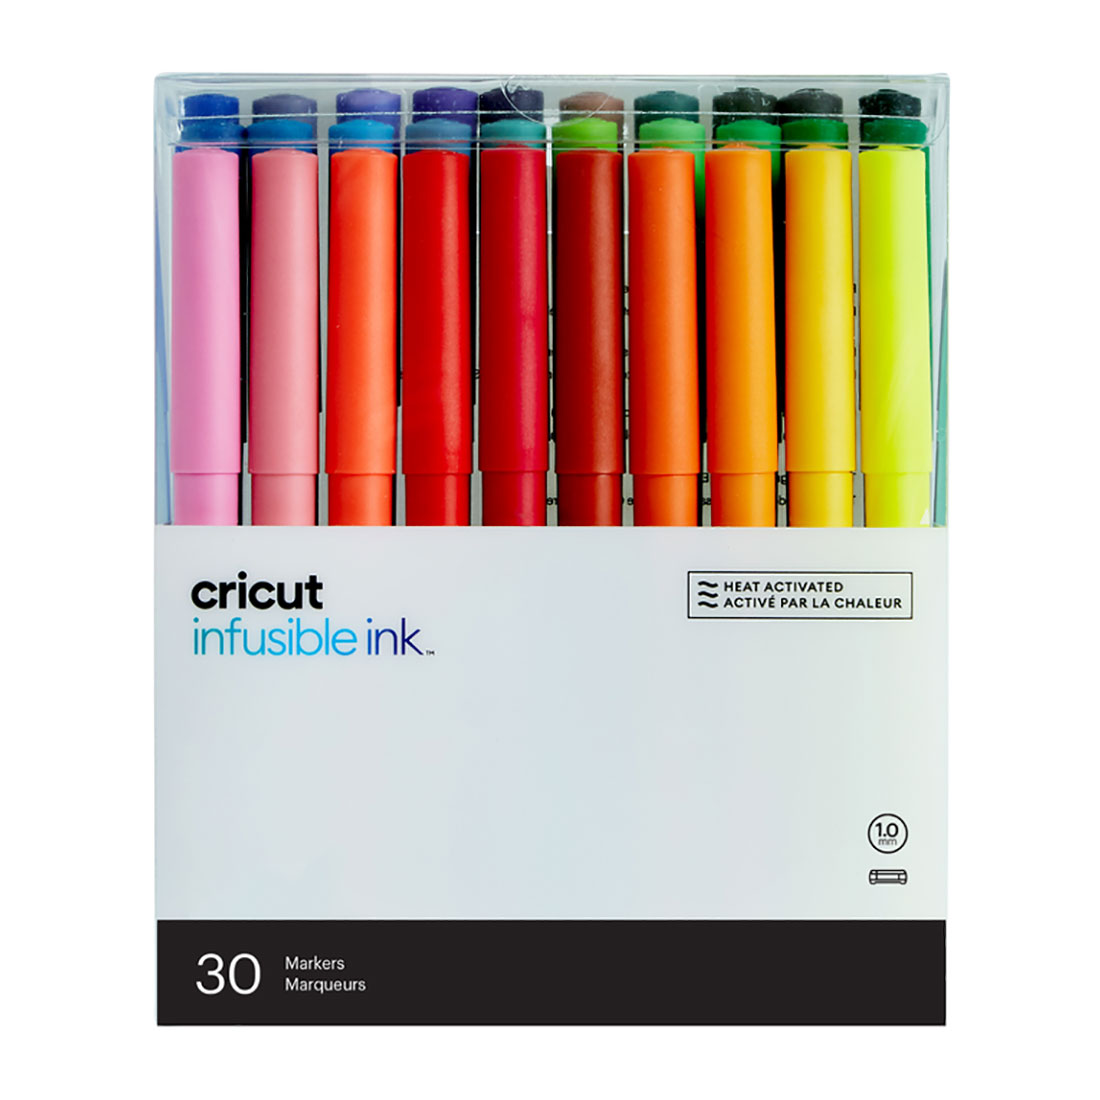 https://cricut.com/on/demandware.static/-/Sites-cricut-master-catalog/default/dwc85e6f19/images//2/0/2008003-infusible-ink-markers-30-pack.jpg